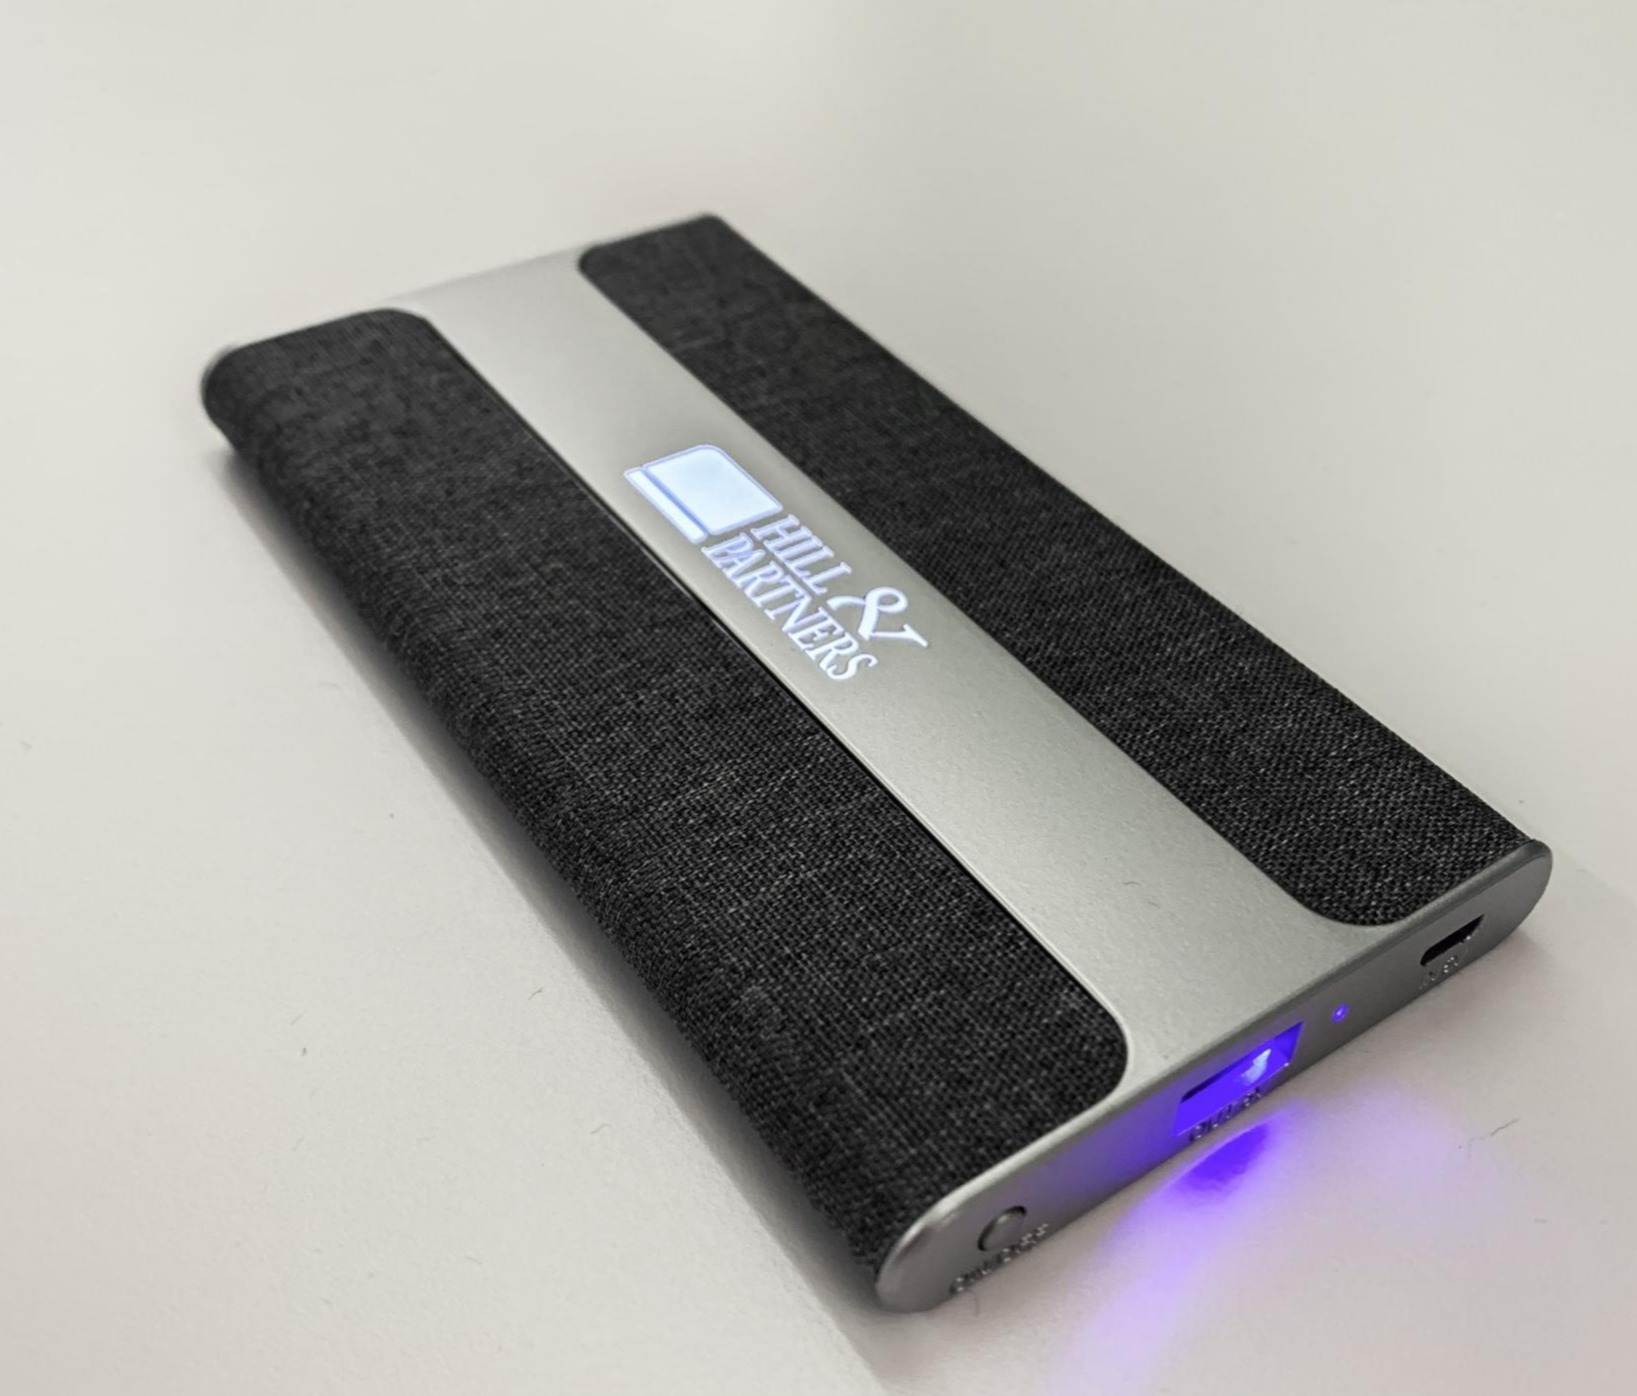 Branded portable battery pack